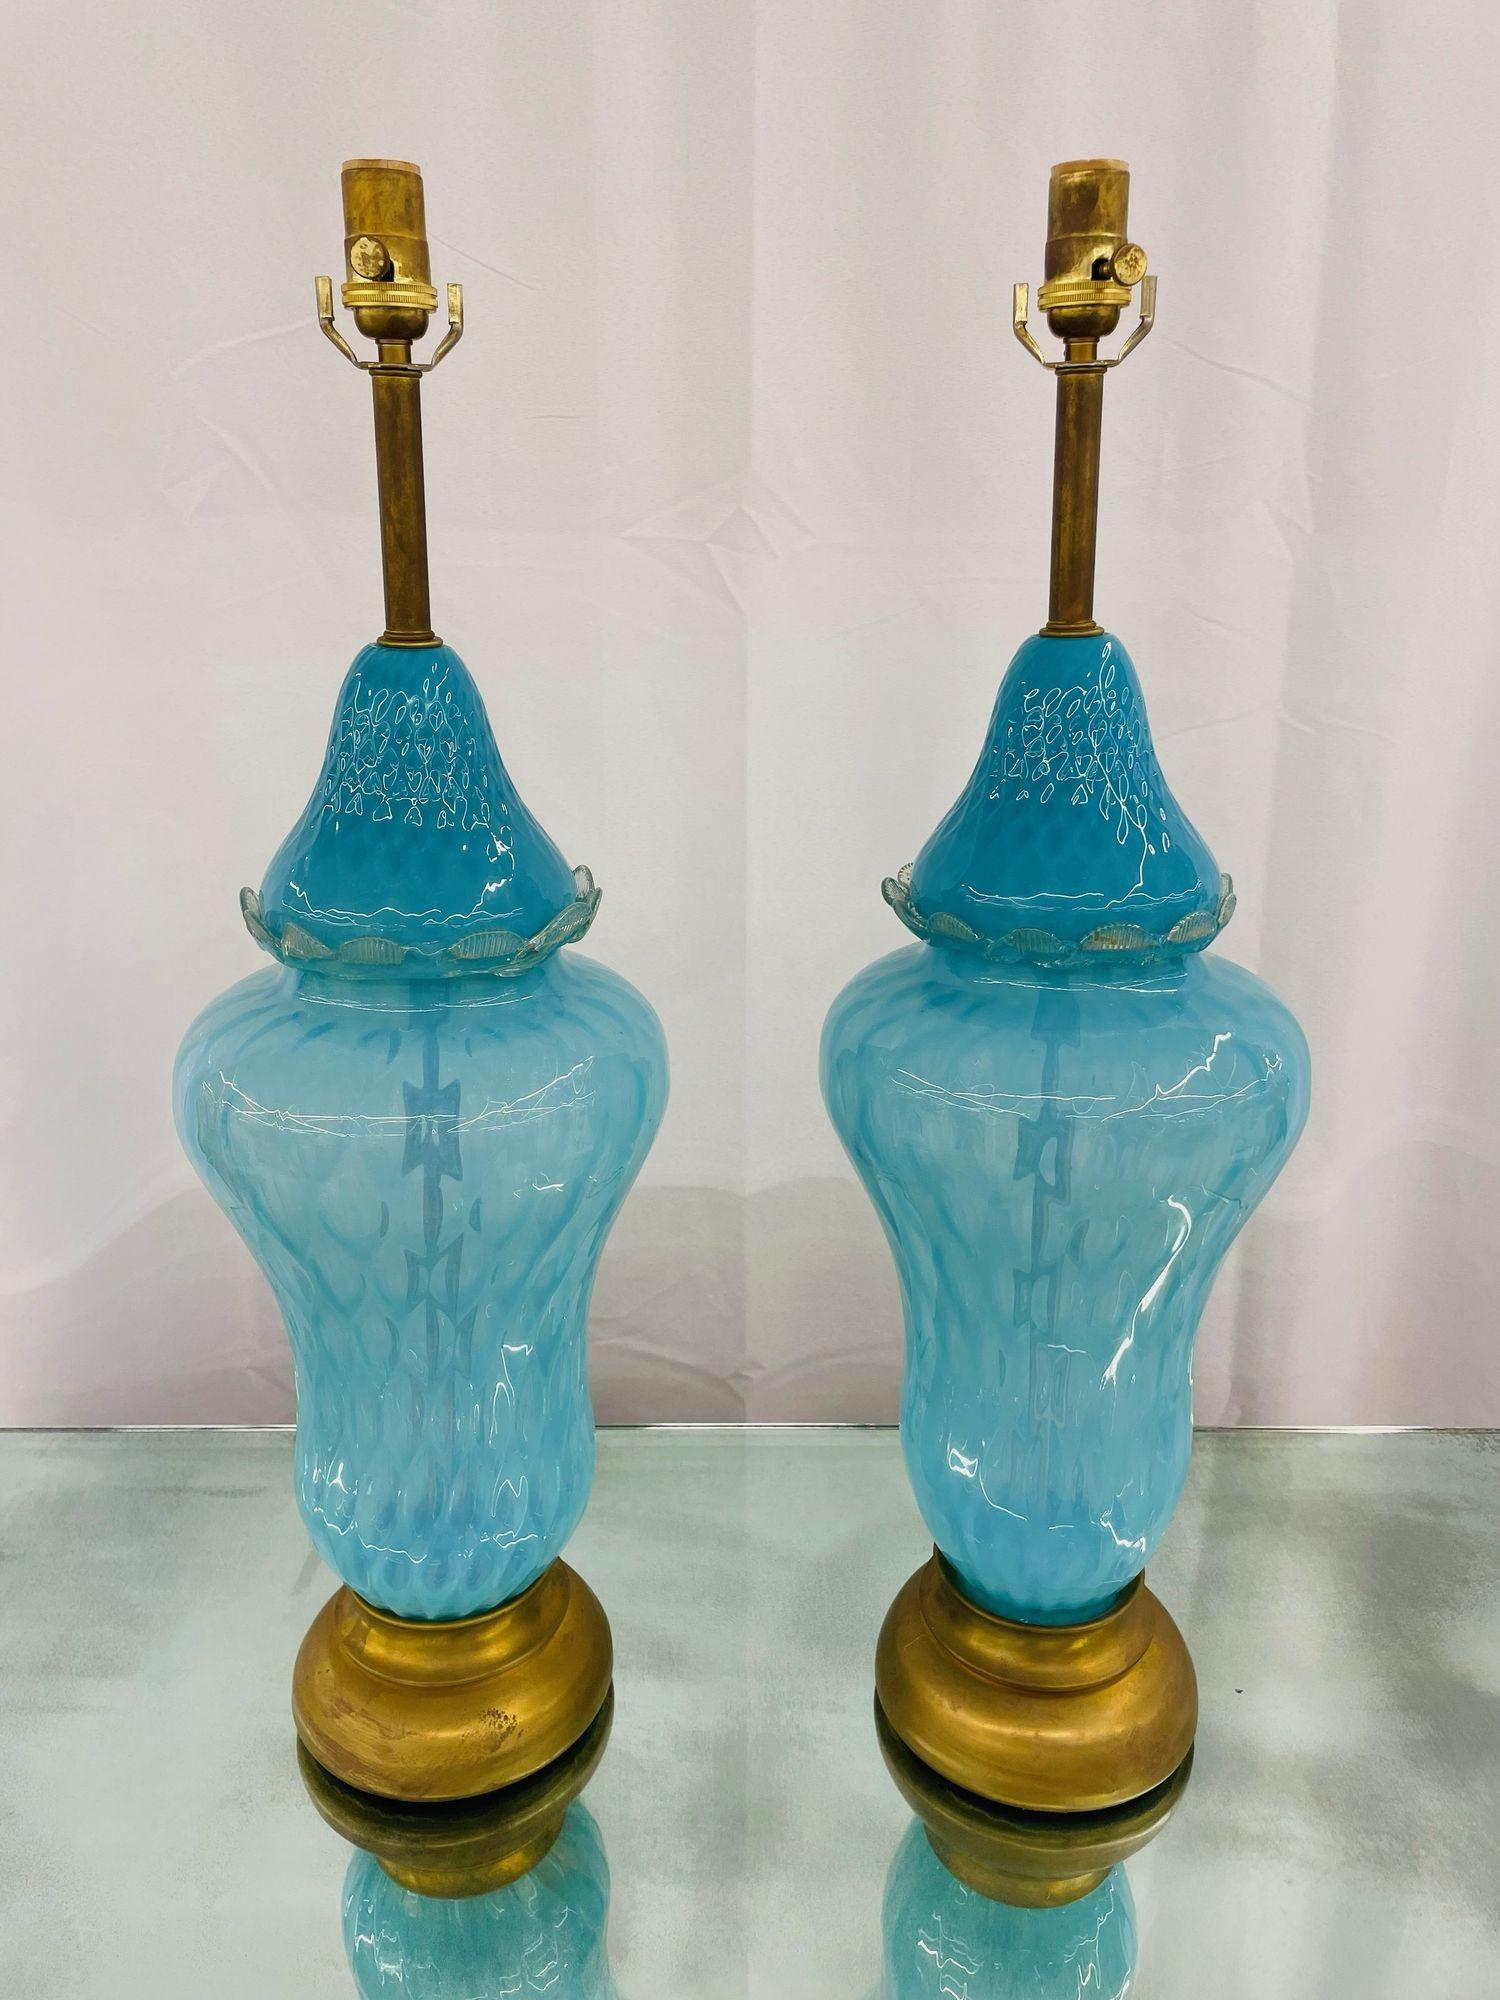 Pair of Italian Mid-Century Modern Murano Glass Table Lamps, Turquoise, Brass
 
Manner of Barovier & Toso
 
Murano Glass, Brass
Italy, 1960s
 
29H x 8 Diameter.